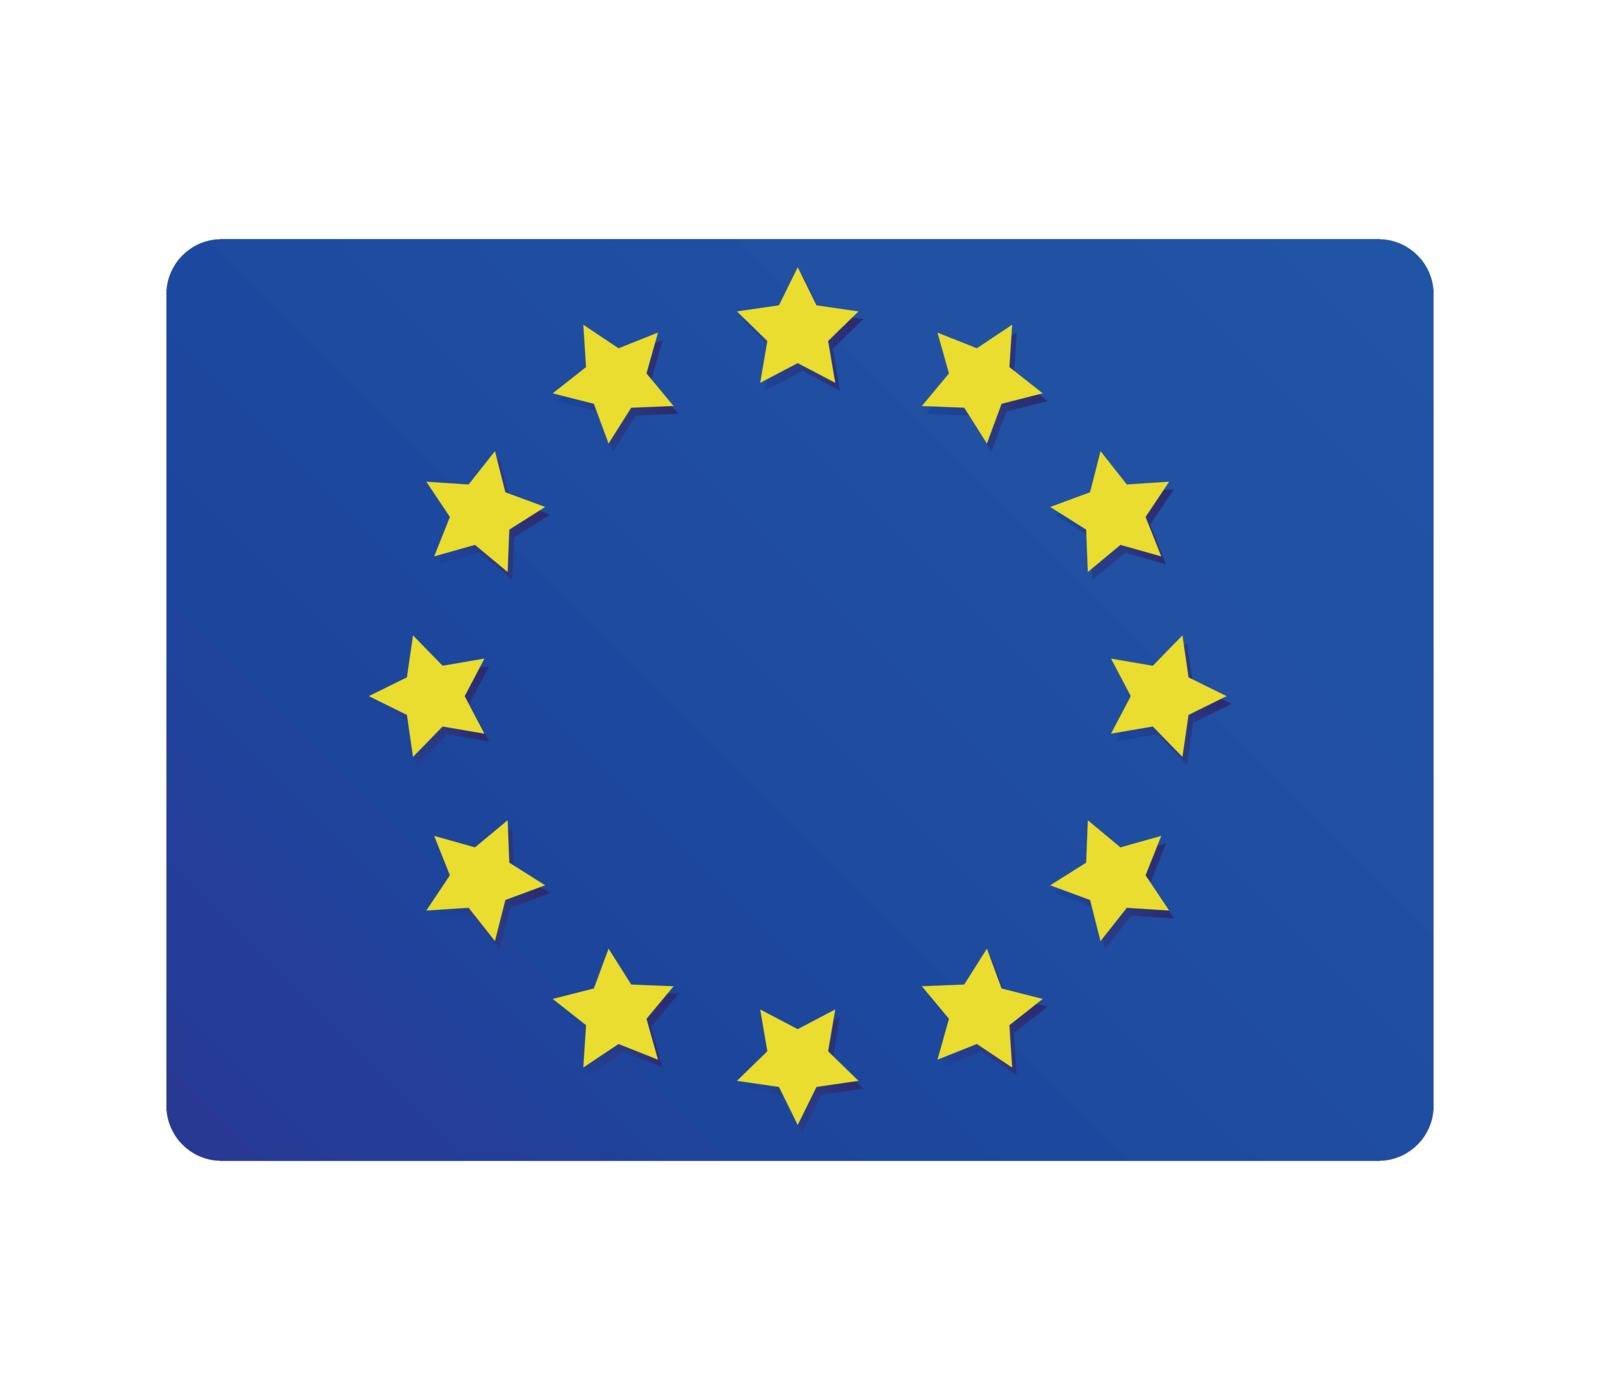 European union flag by Mark1987